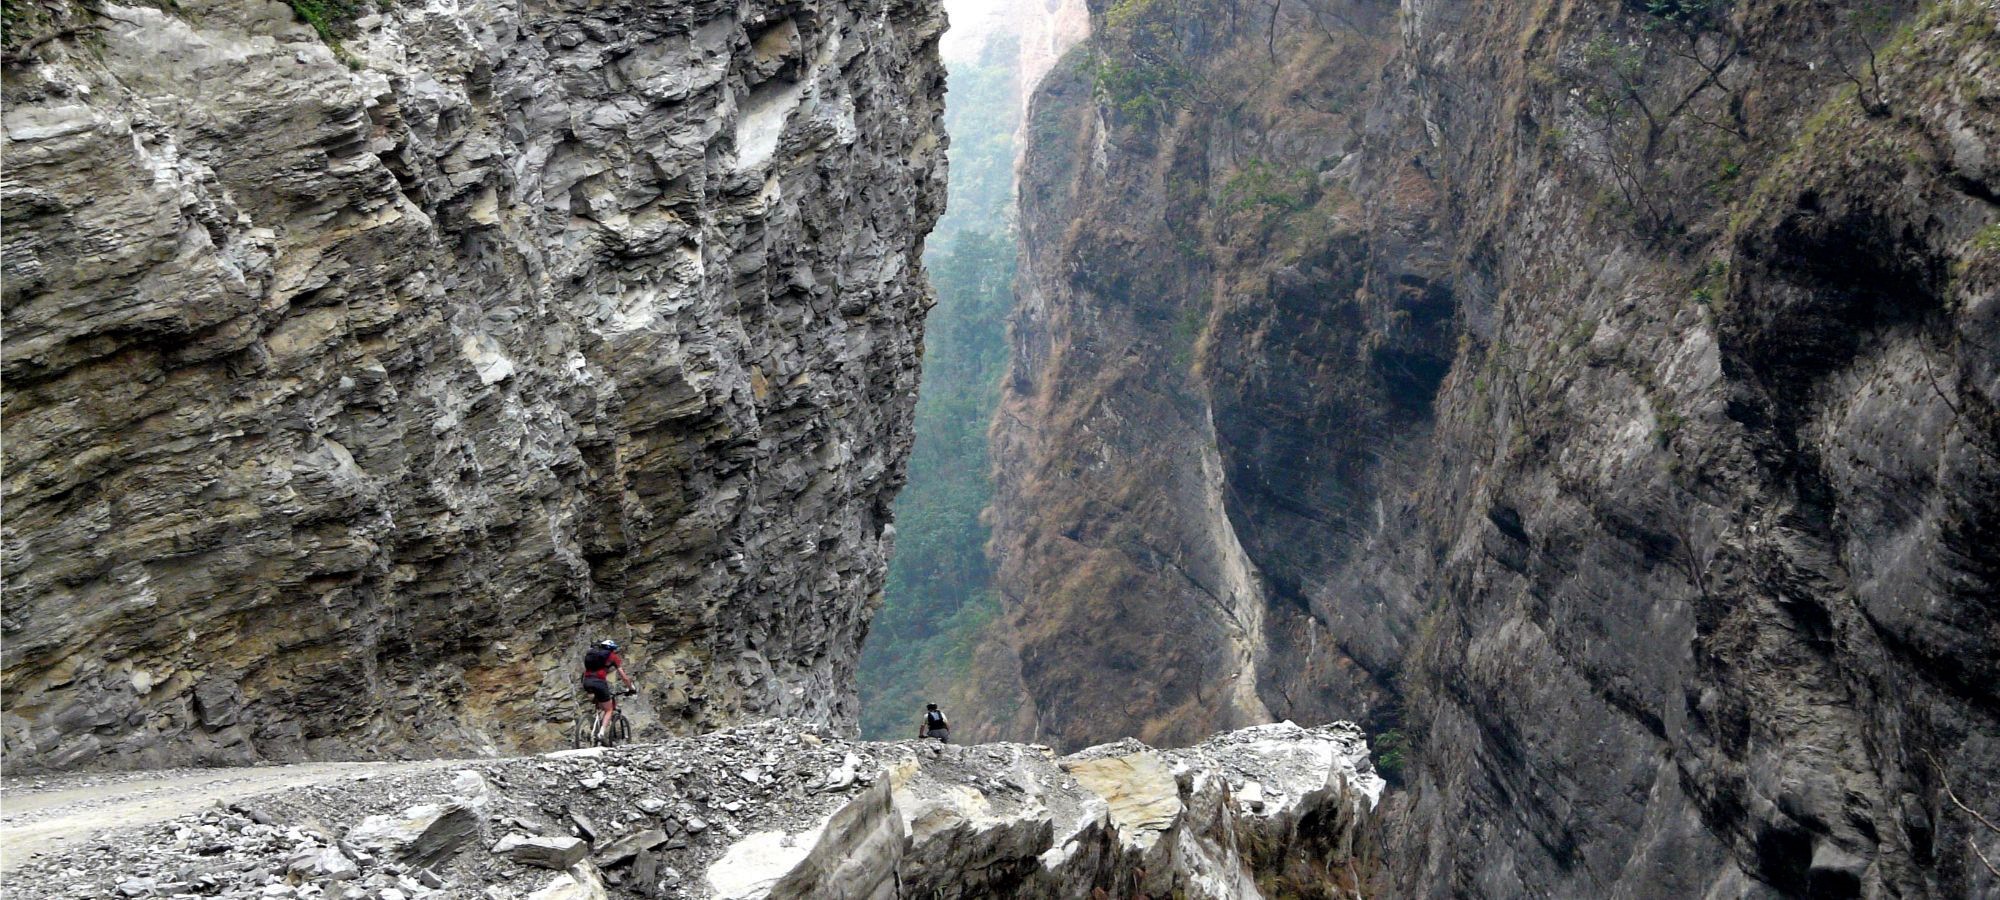 Mountain Biking Tours Nepal